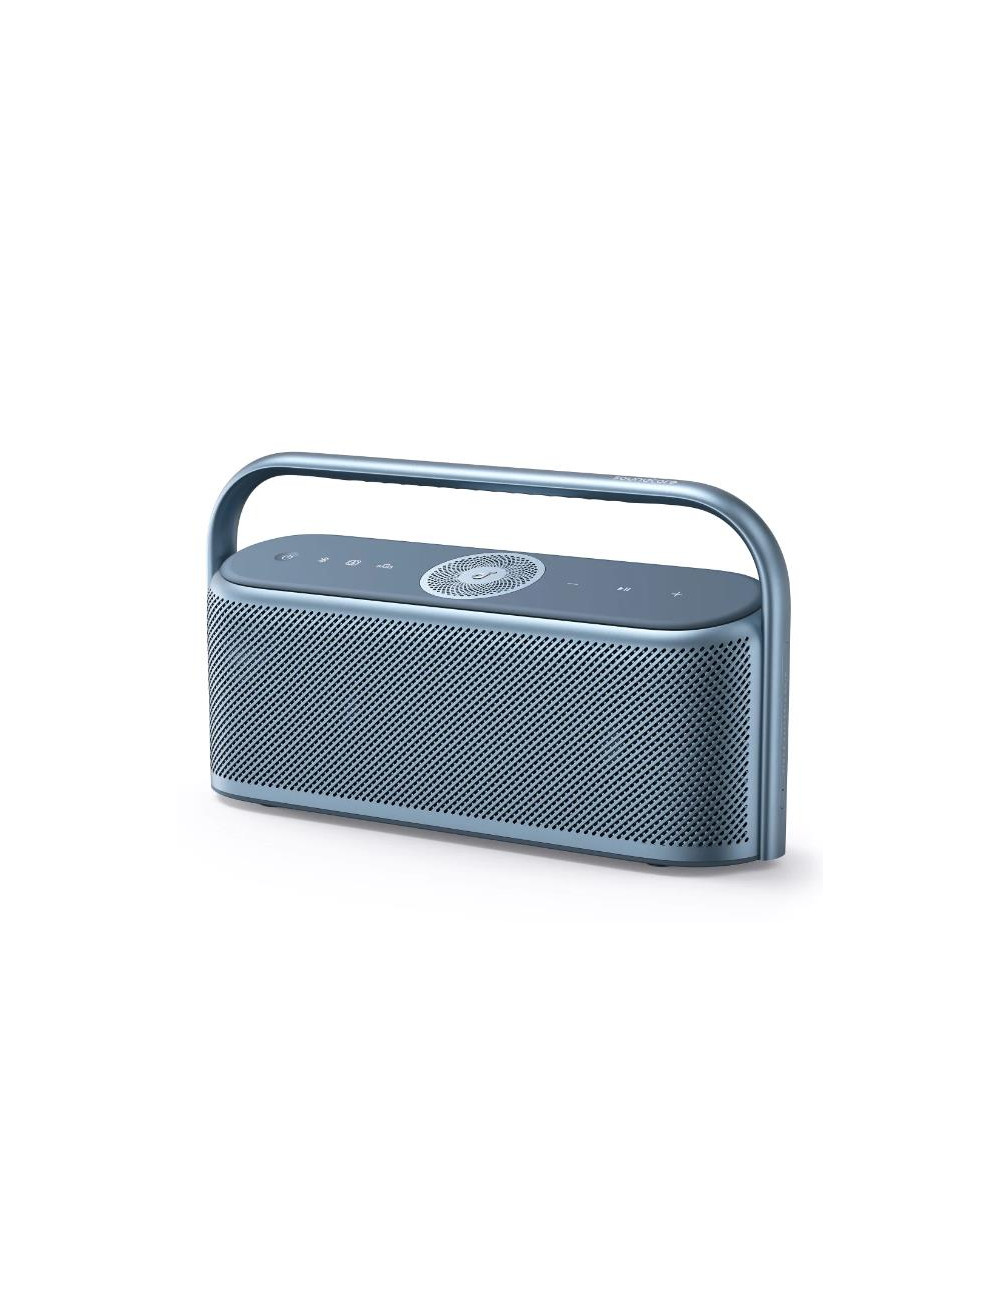 Portable Speaker|SOUNDCORE|X600|Blue|Portable/Waterproof/Wireless|1xStereo jack 3.5mm|Bluetooth|A3130031